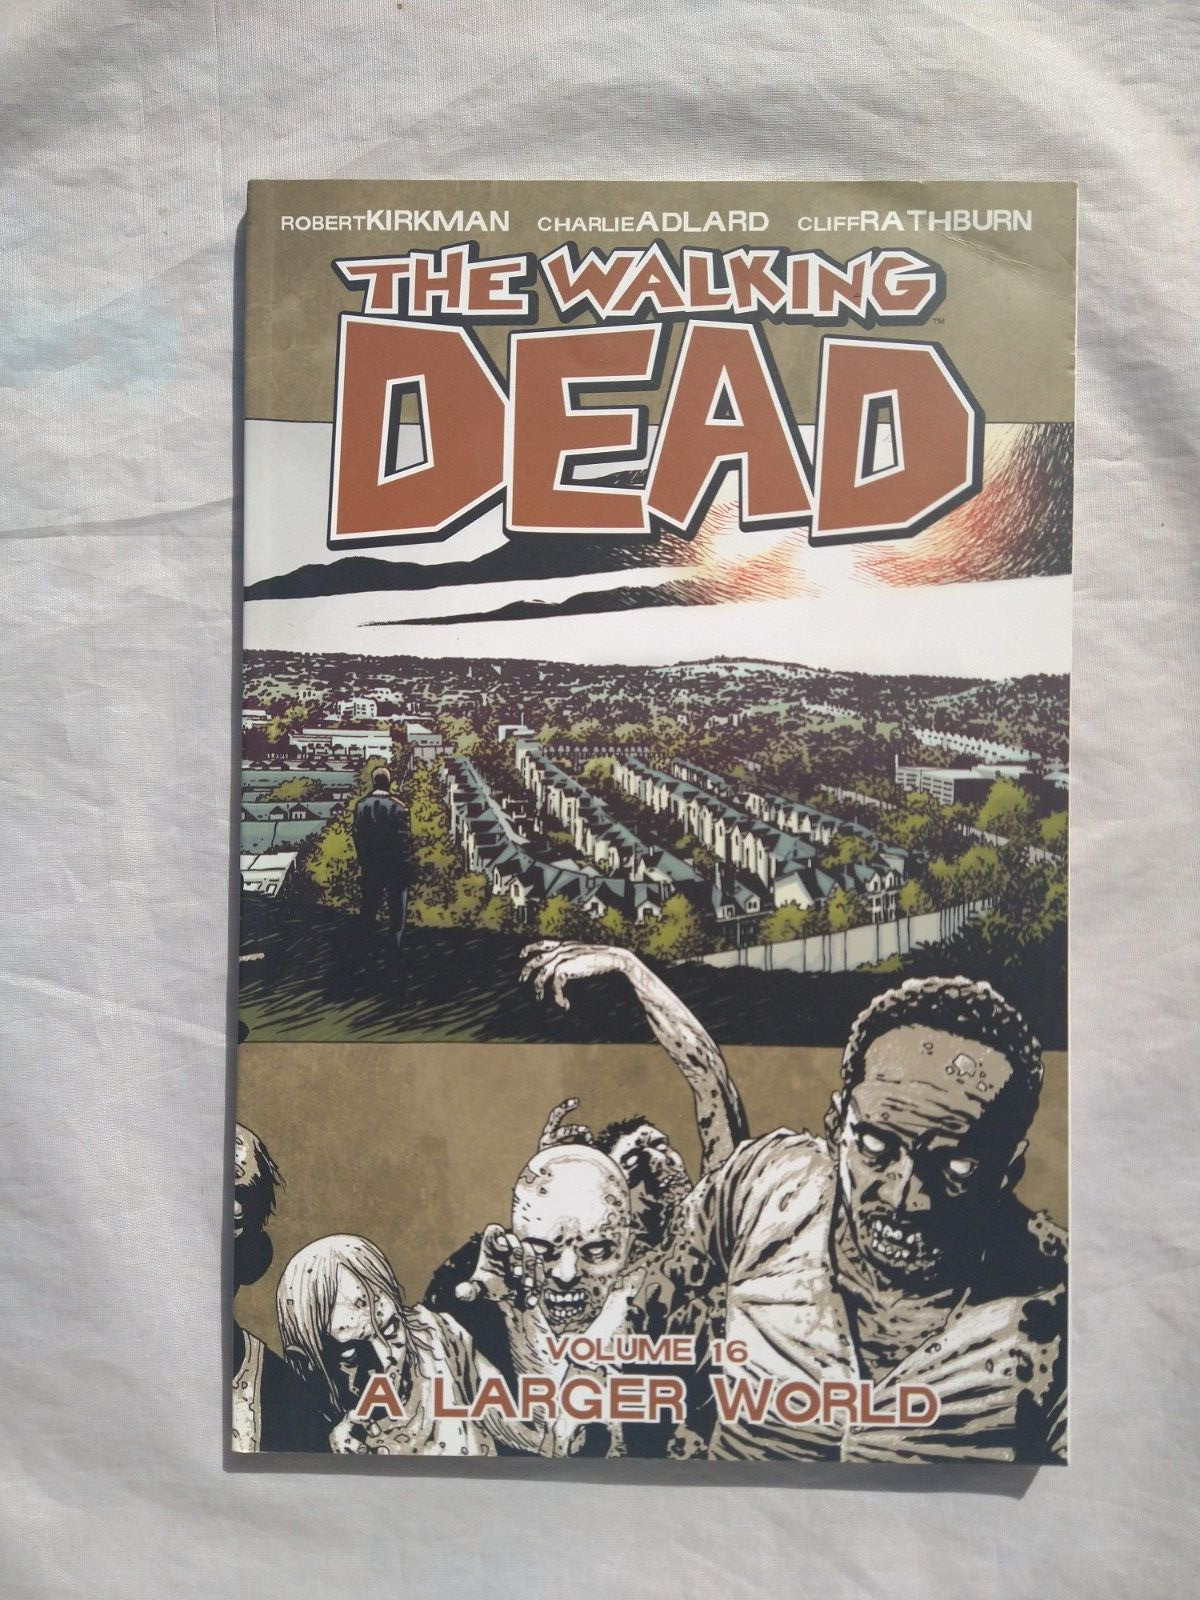 The Walking Dead Volume 16 Trade Paperback Robert Kirkman Image Comics